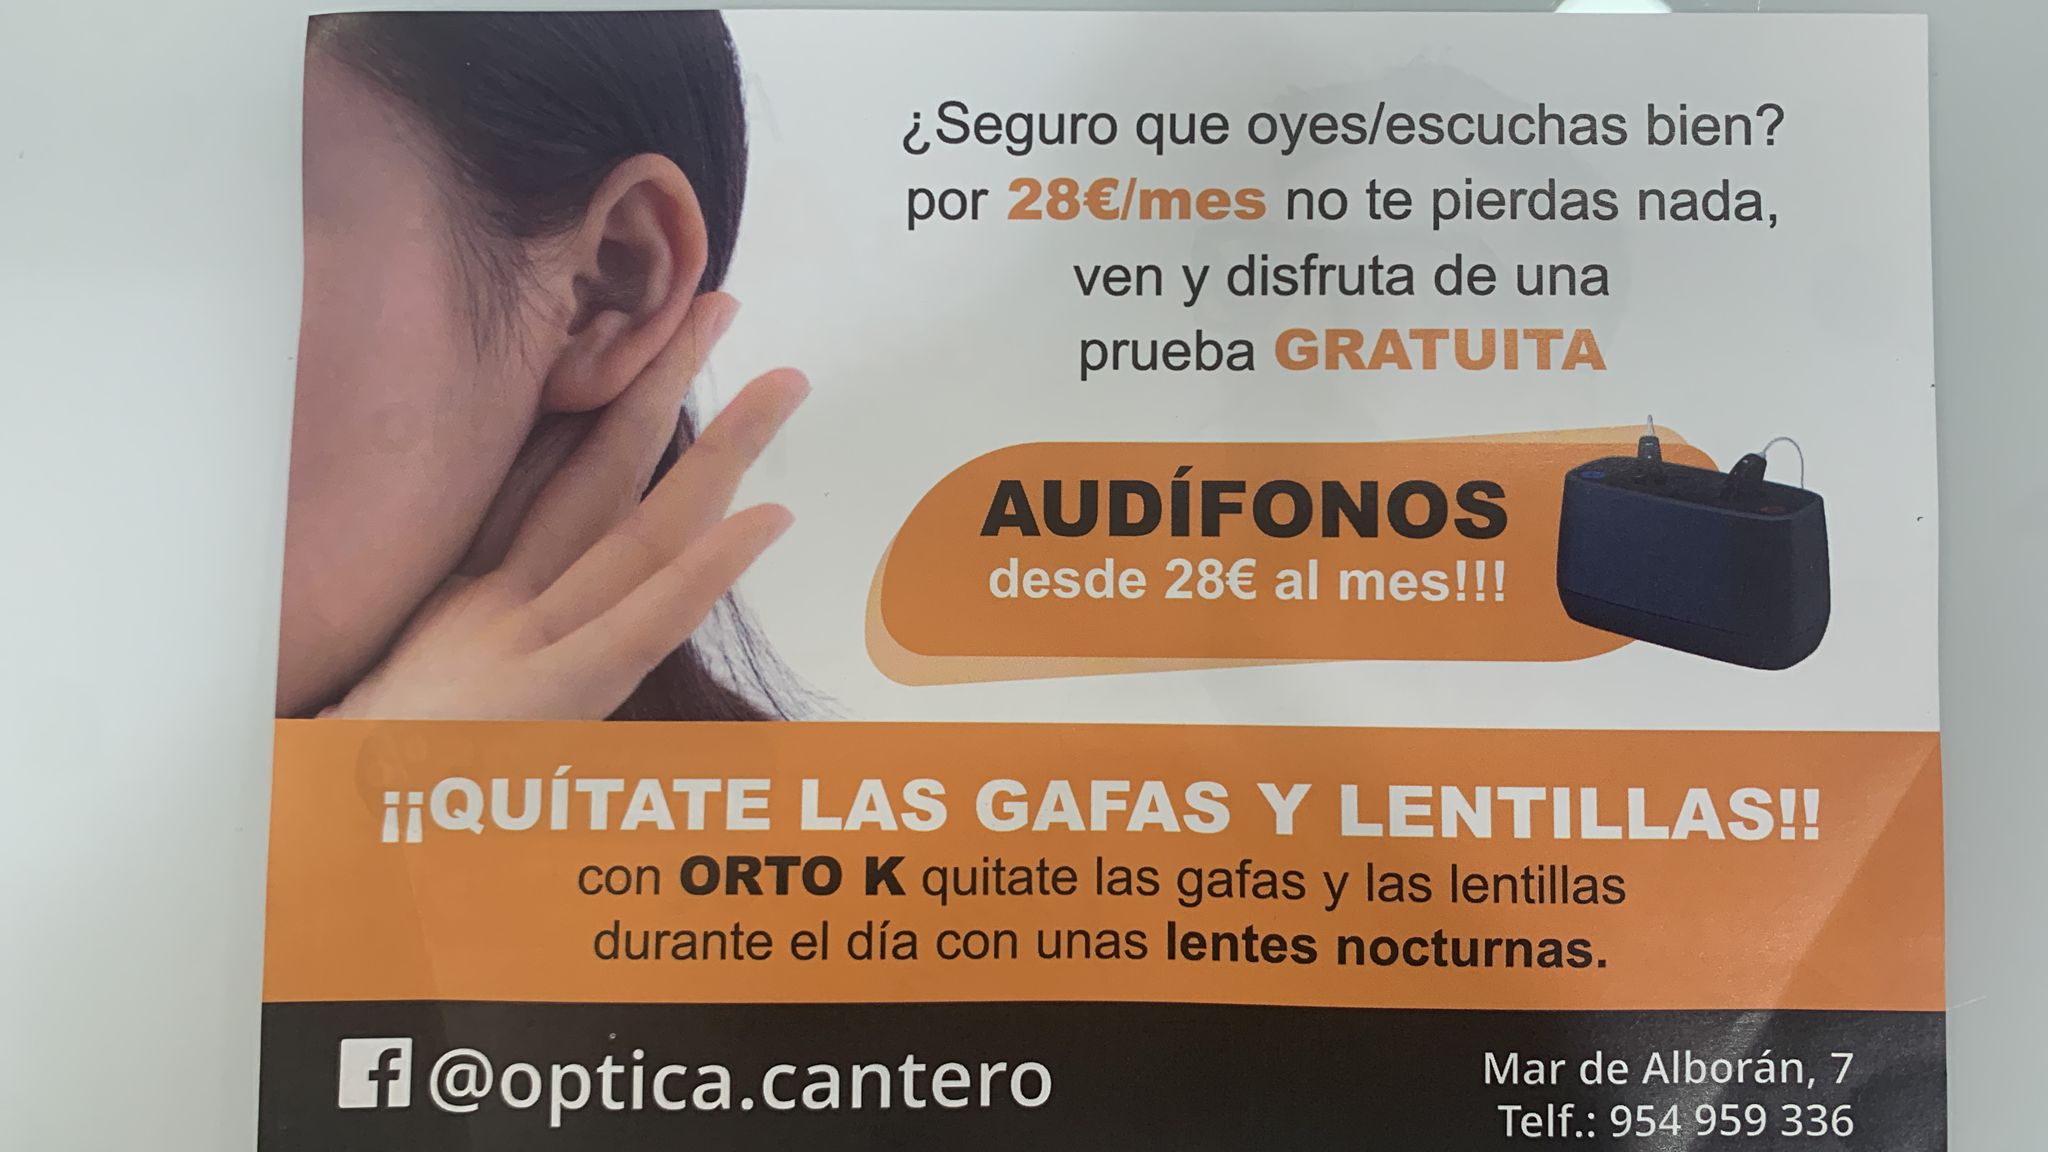 Images Centro Auditivo Óptica Cantero - Pino Montano